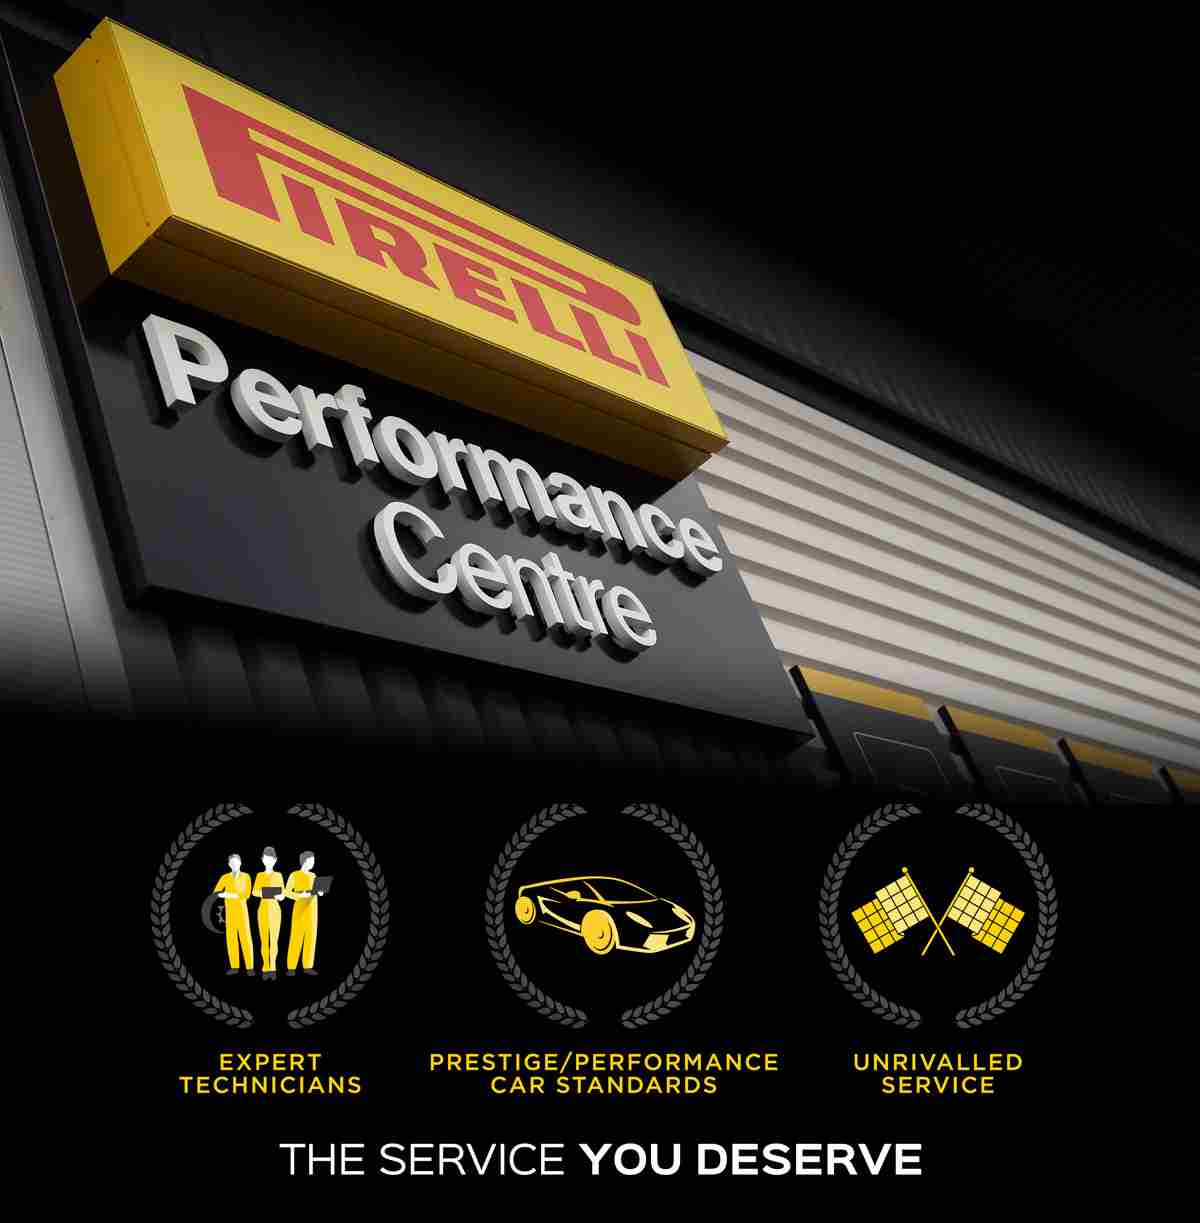 Pirelli Performance Centre